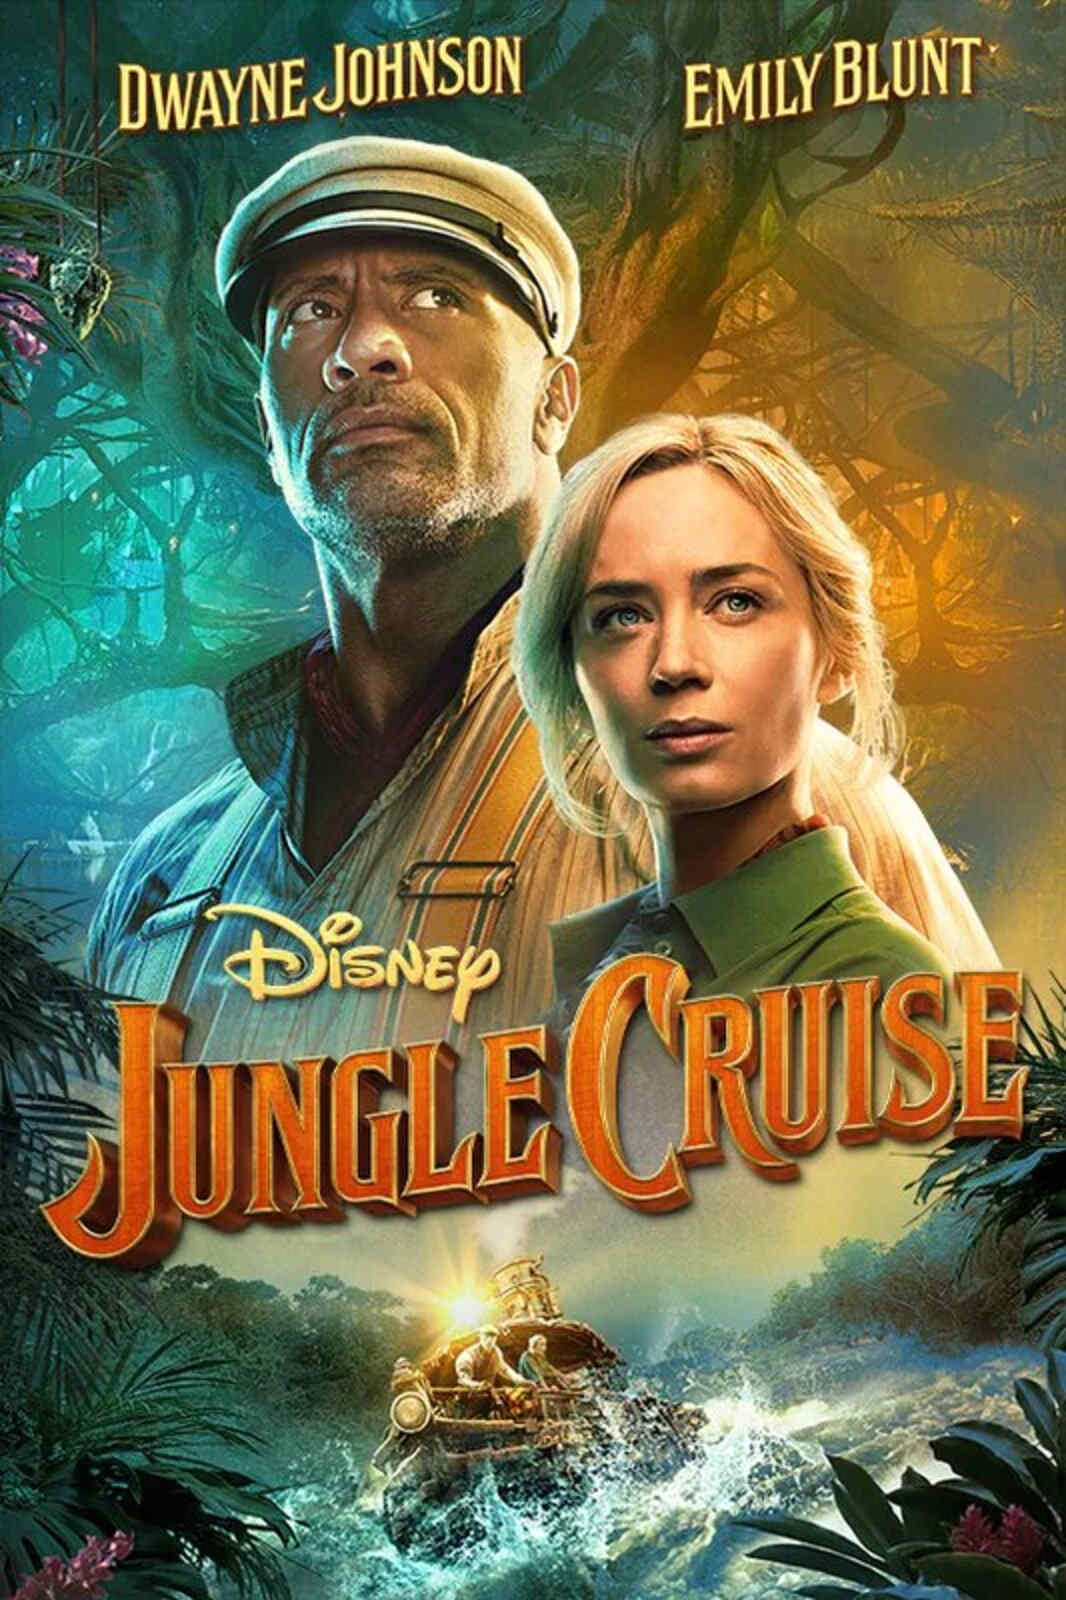 the jungle cruise movie